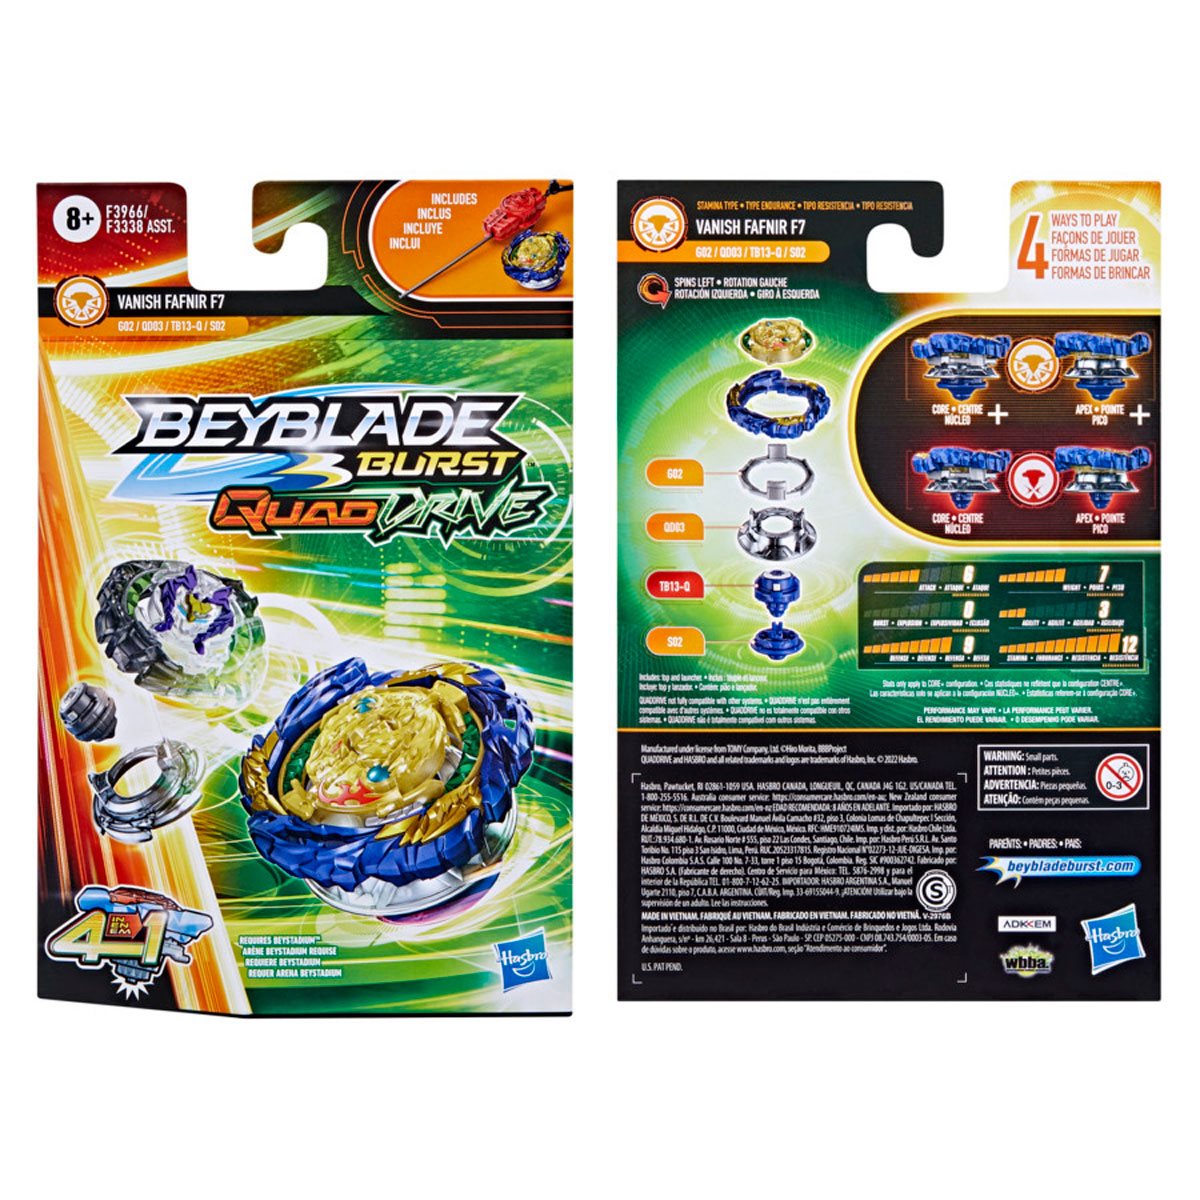 Beyblade Burst QuadDrive Vanish Fafnir F7 Spinning Top Starter Pack --  Battling Game Top Toy with Launcher - Beyblade